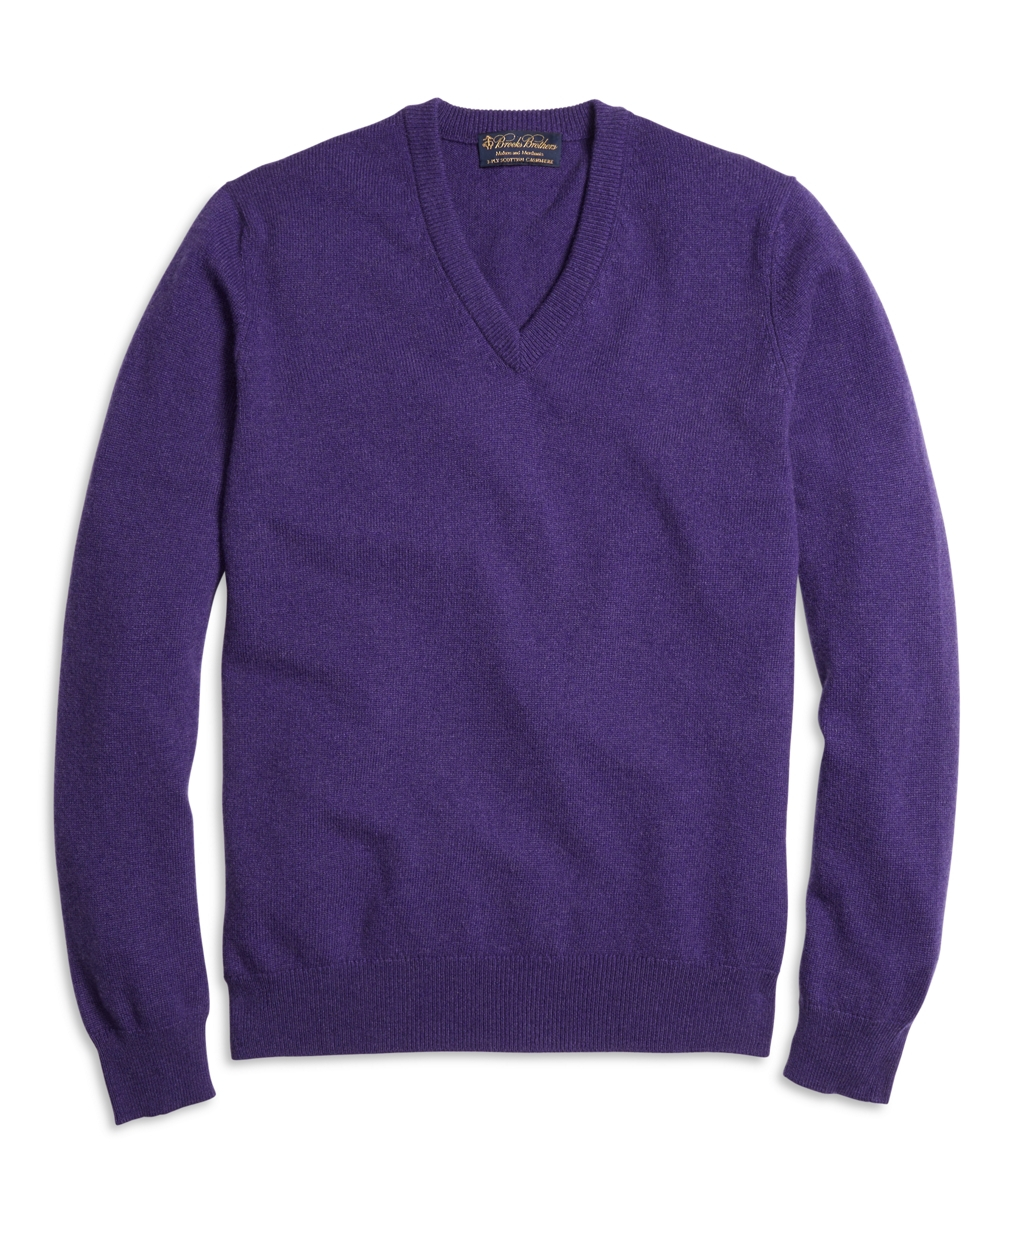 13 Colors Mens 100% Merino Wool Sweater Spring Autumn